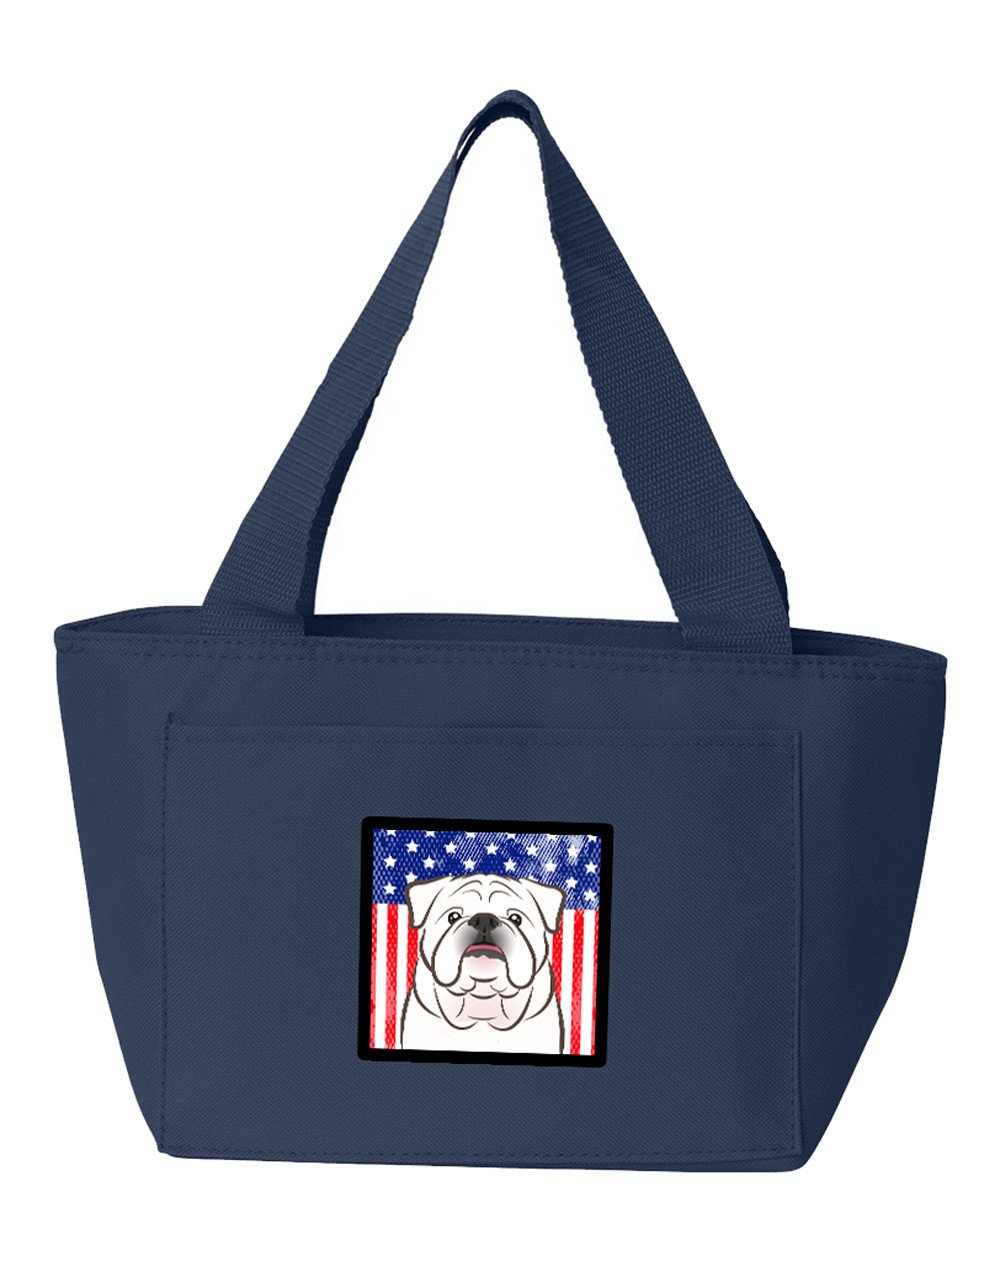 American Flag and White English Bulldog  Lunch Bag BB2150NA-8808 by Caroline's Treasures